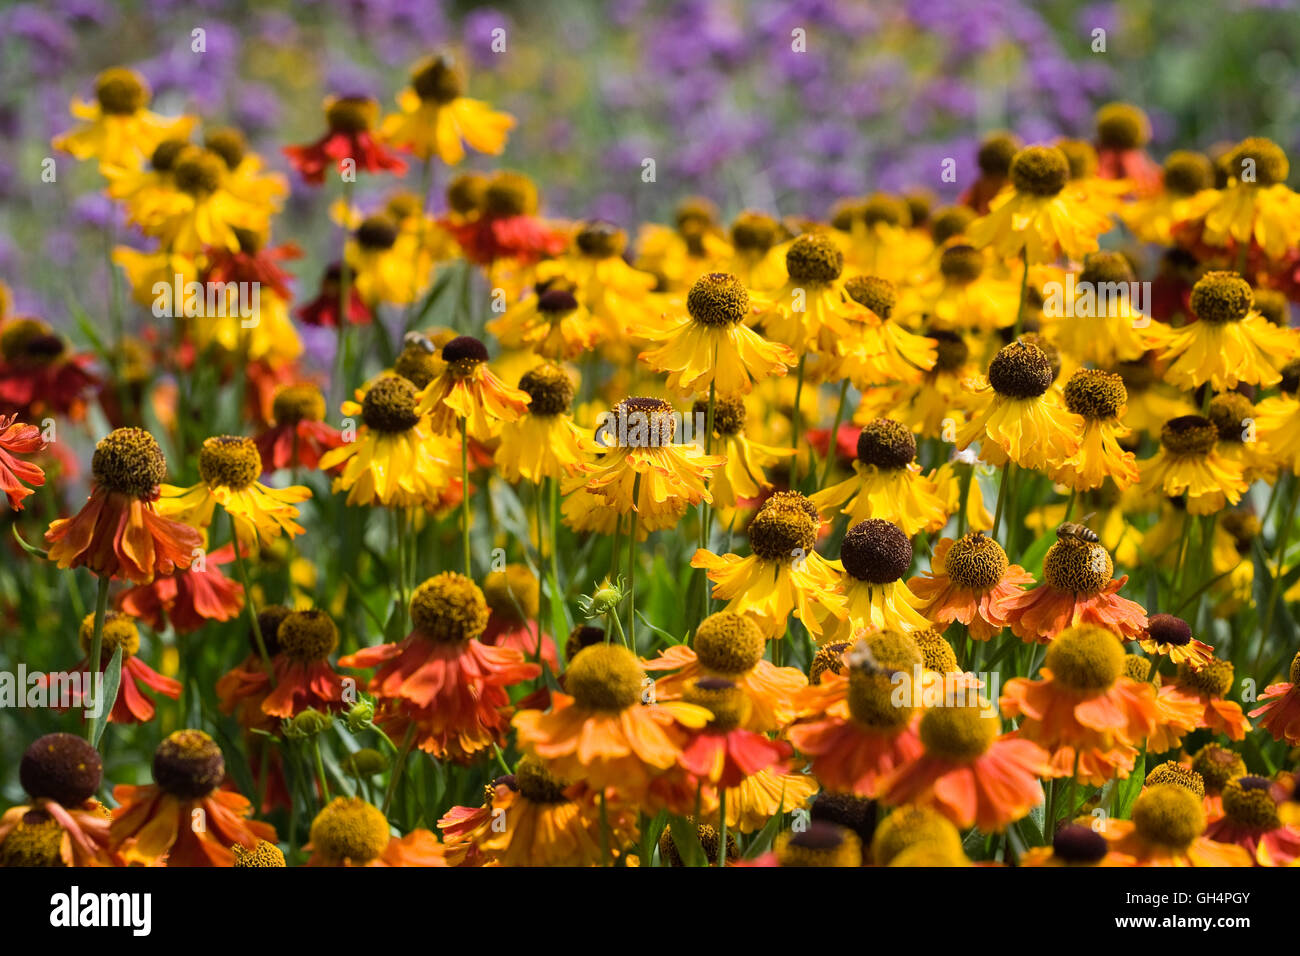 Helenium. Sneezeweed flowers growing in an herbaceous border. Stock Photo